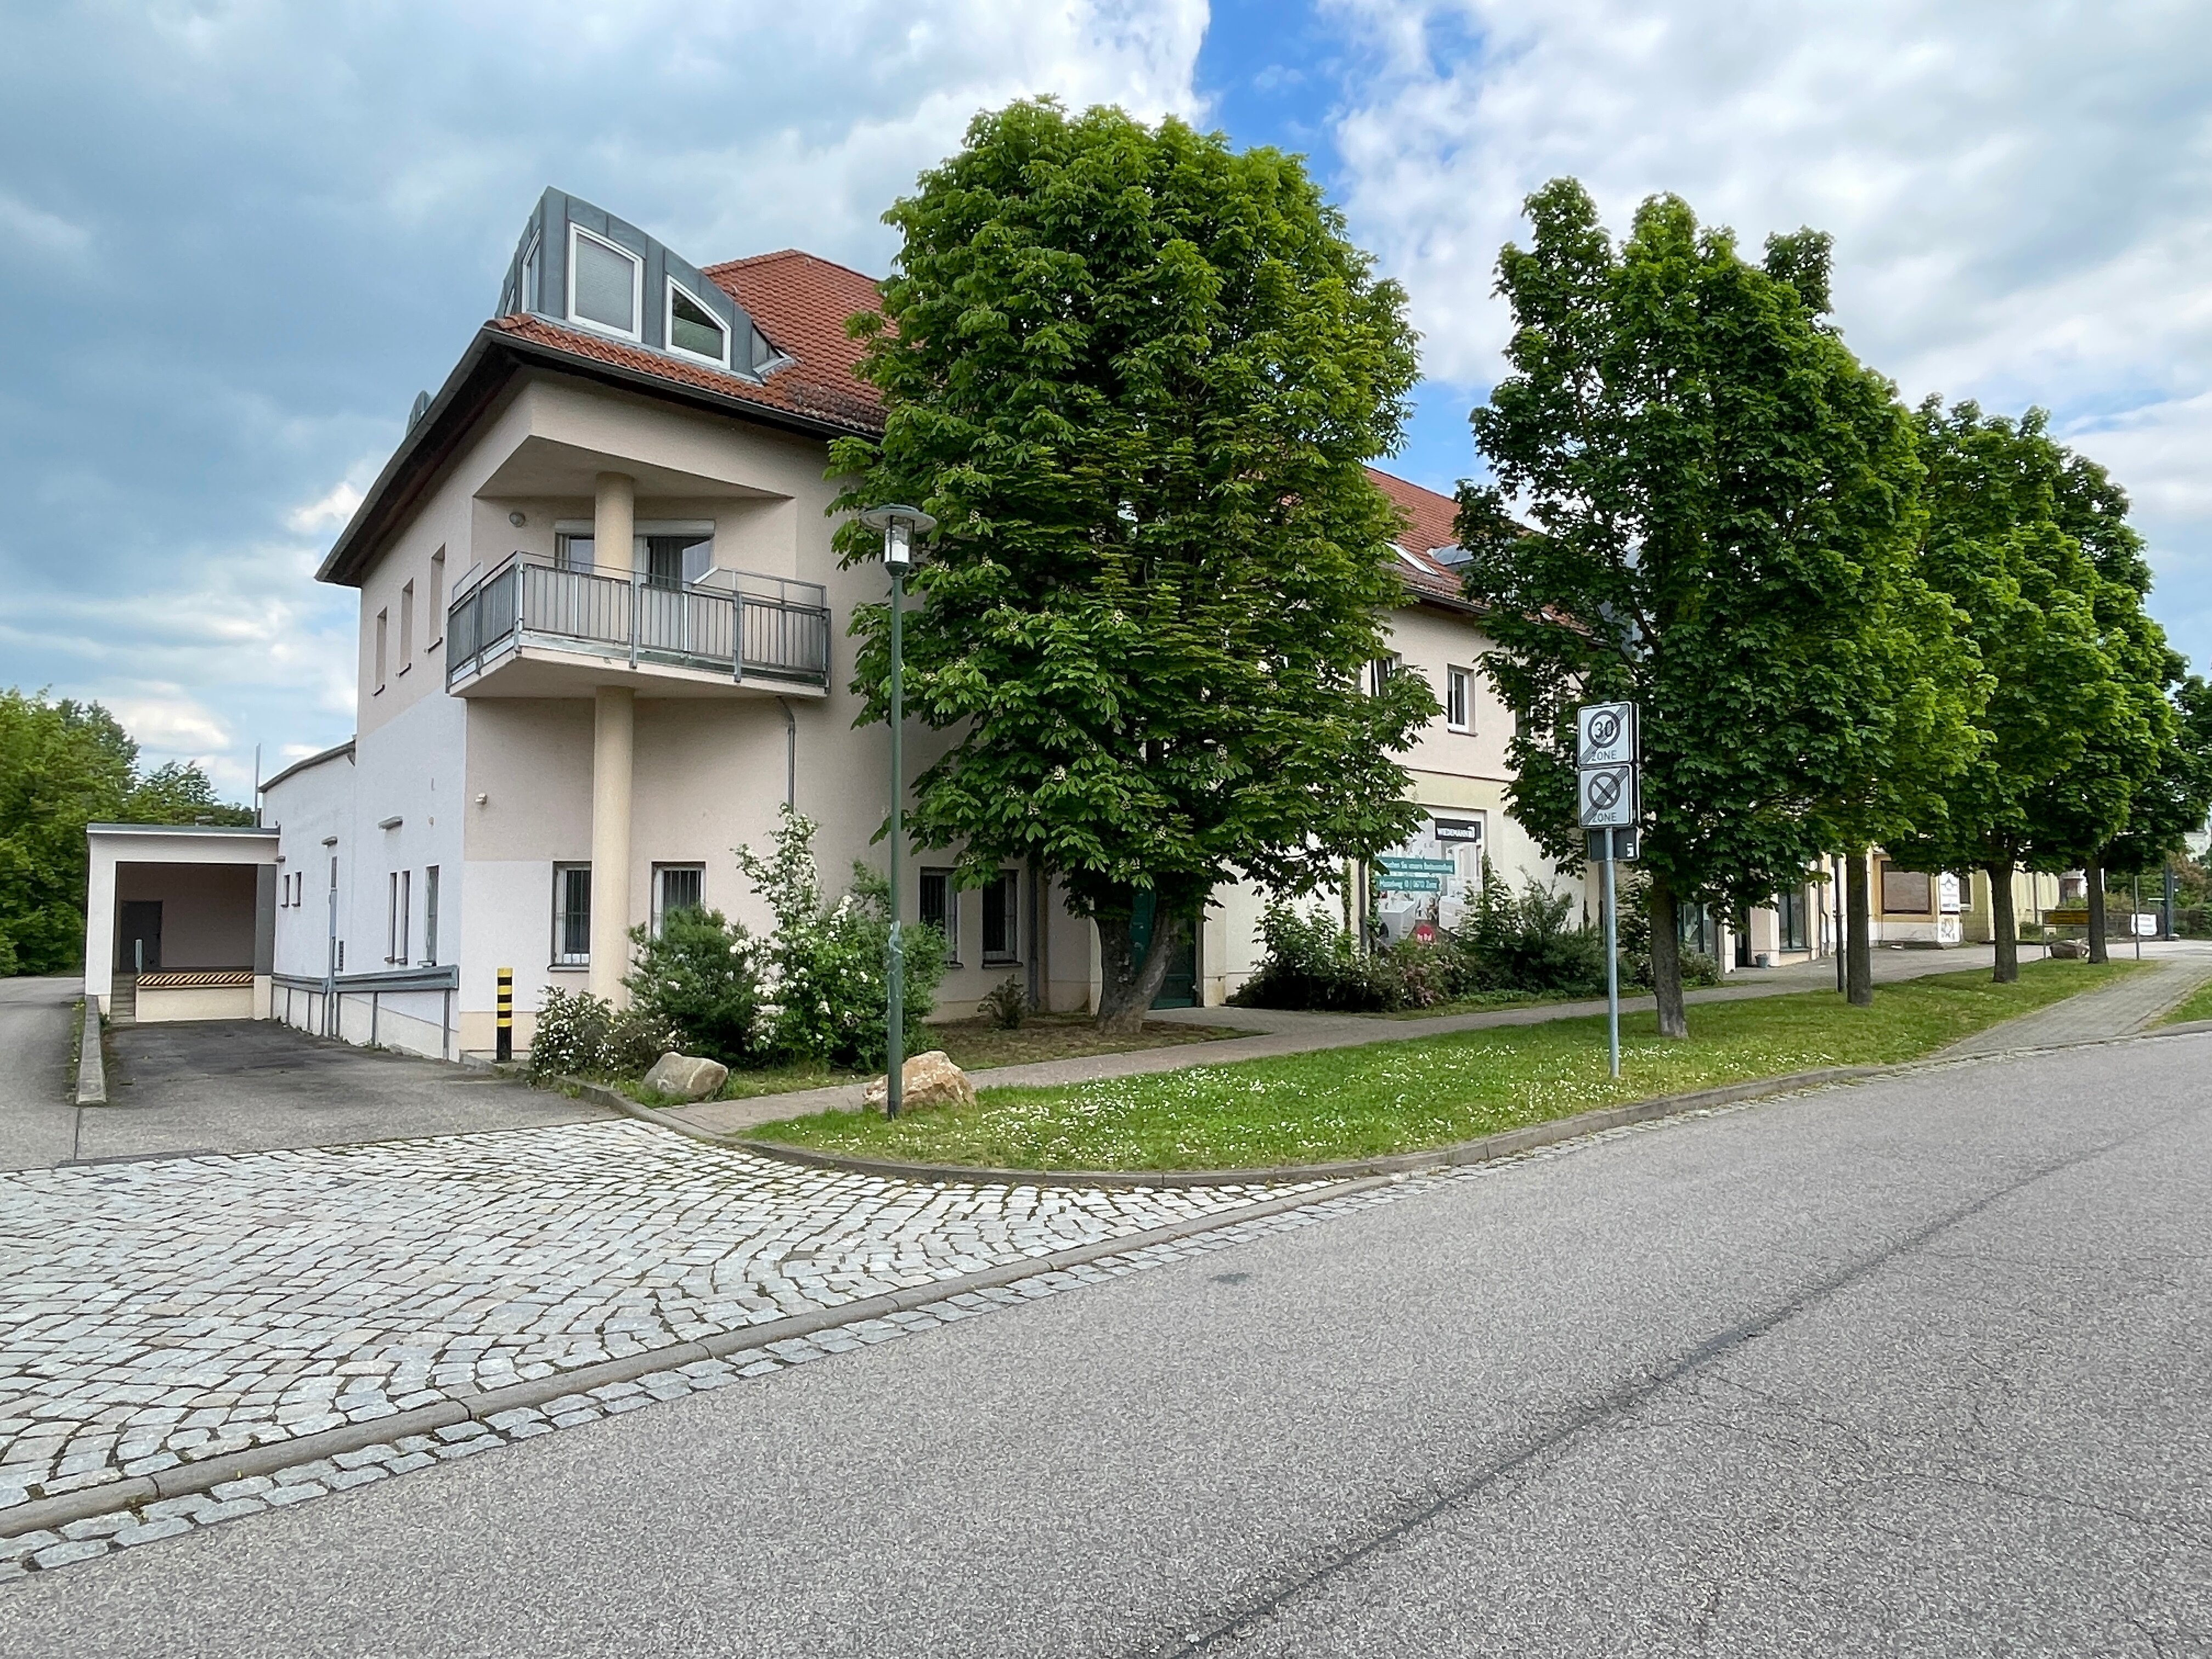 Verkaufsfläche zum Kauf 670 € 1.640 m²<br/>Fläche Roßbacher Straße 9, 9a, 9b Neujanisroda Naumburg (Saale) 06618